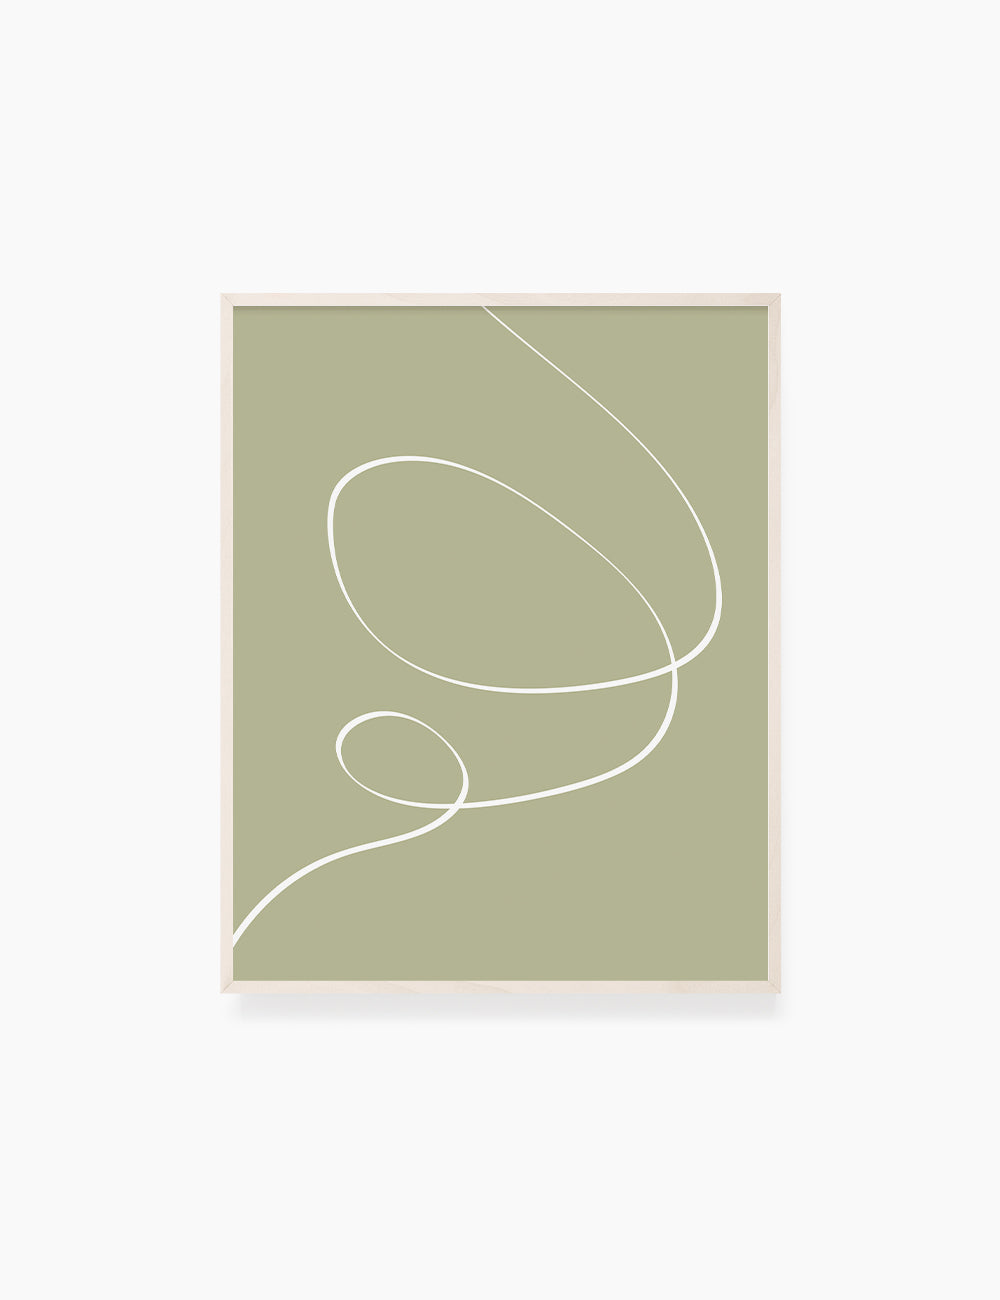 MINIMAL LINE ART. Abstract. Boho. Green. Printable Wall Art Illustration. - PAPER MOON Art & Design